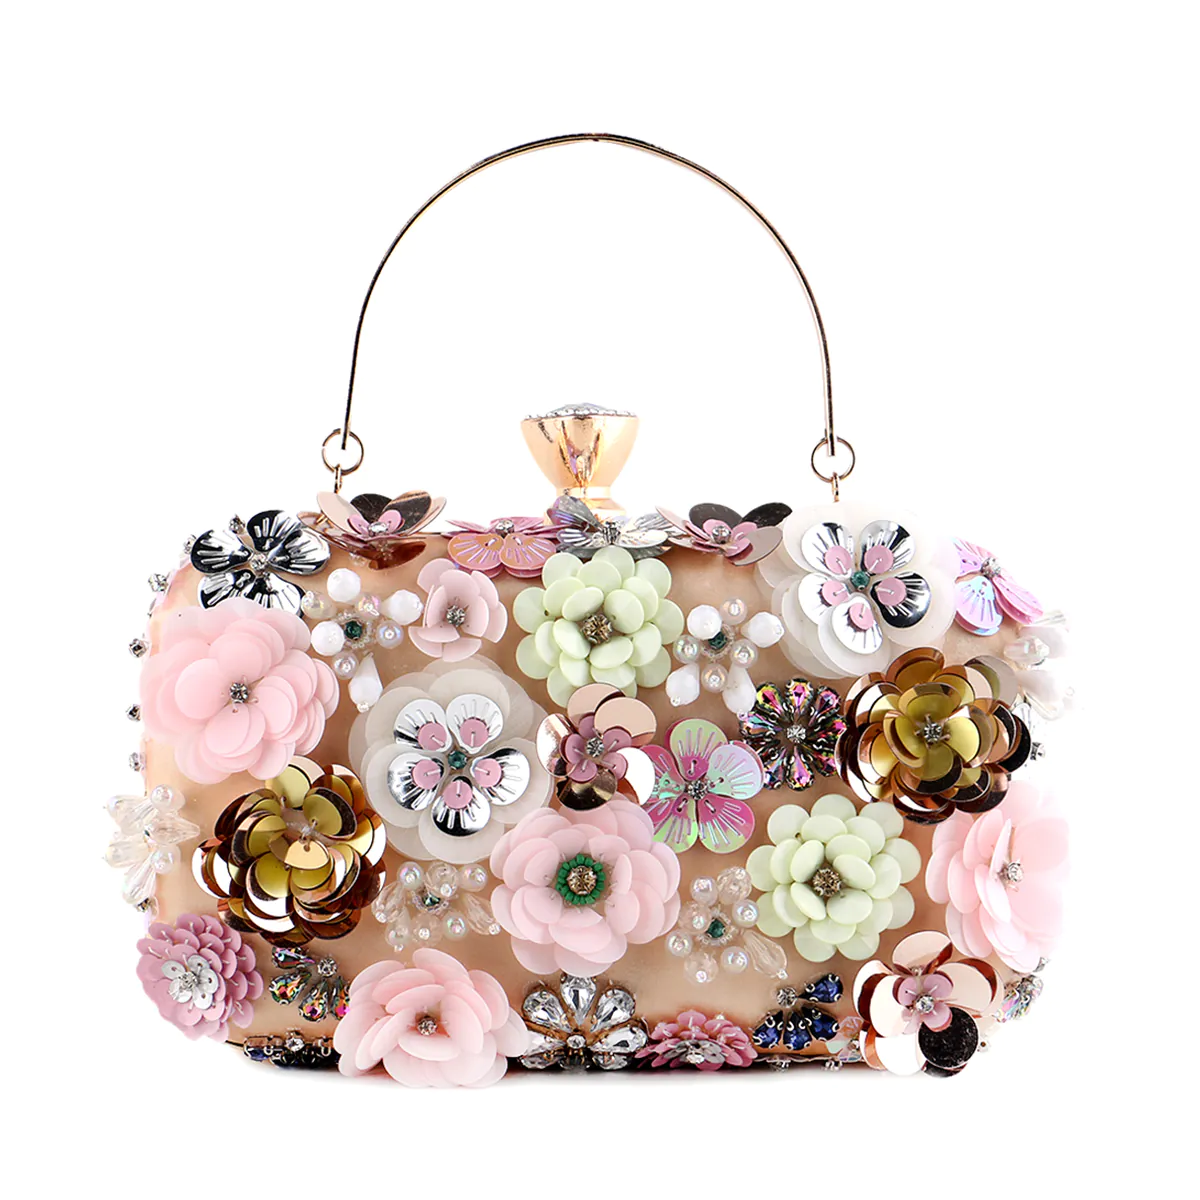 Floral Beaded Evening Bag Clutch Purse Wedding Party Handbag08